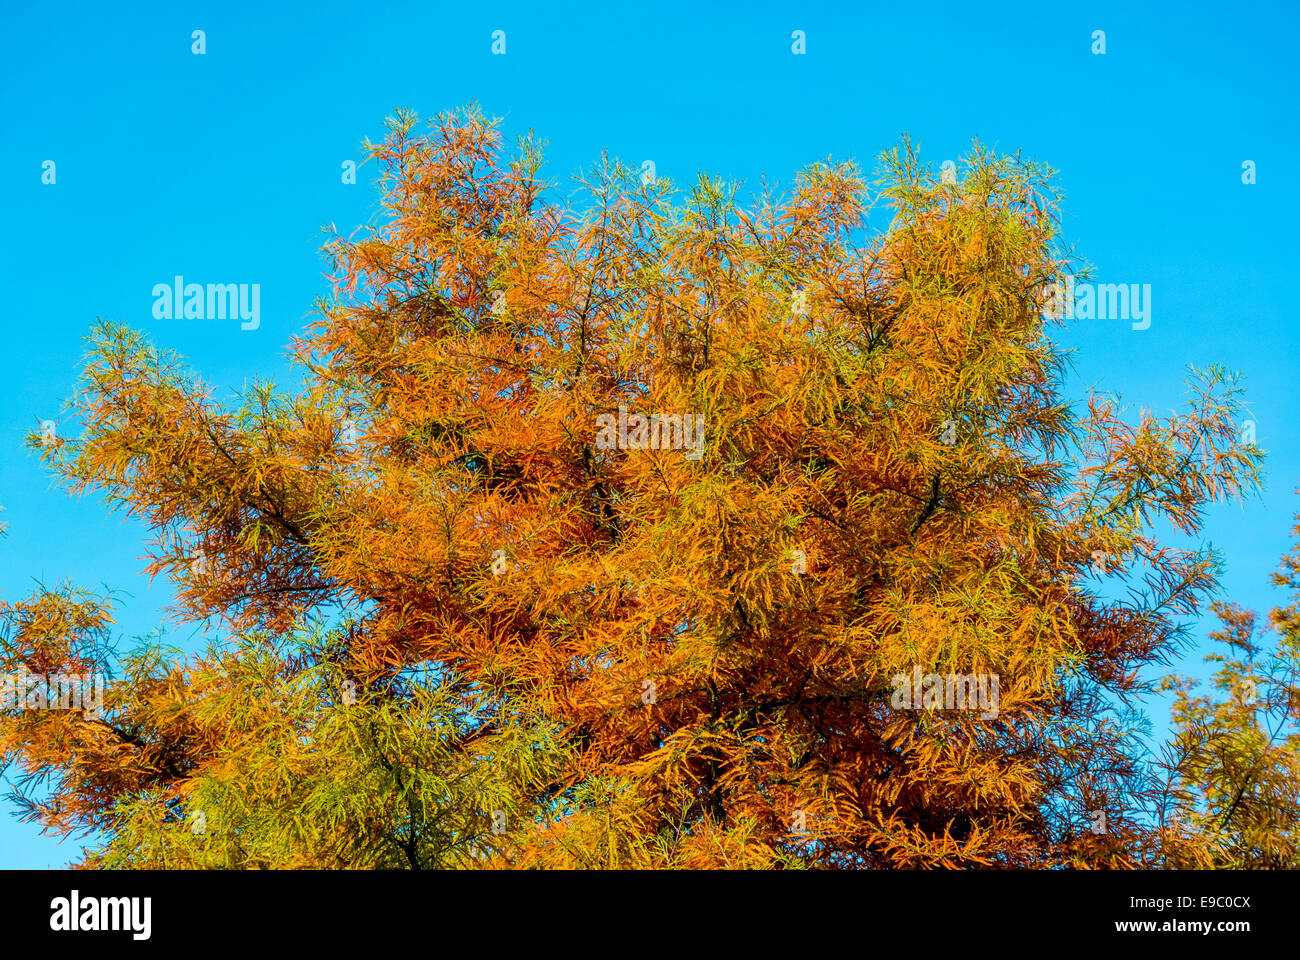 Golden leaved tree in Autumn. Stock Photo